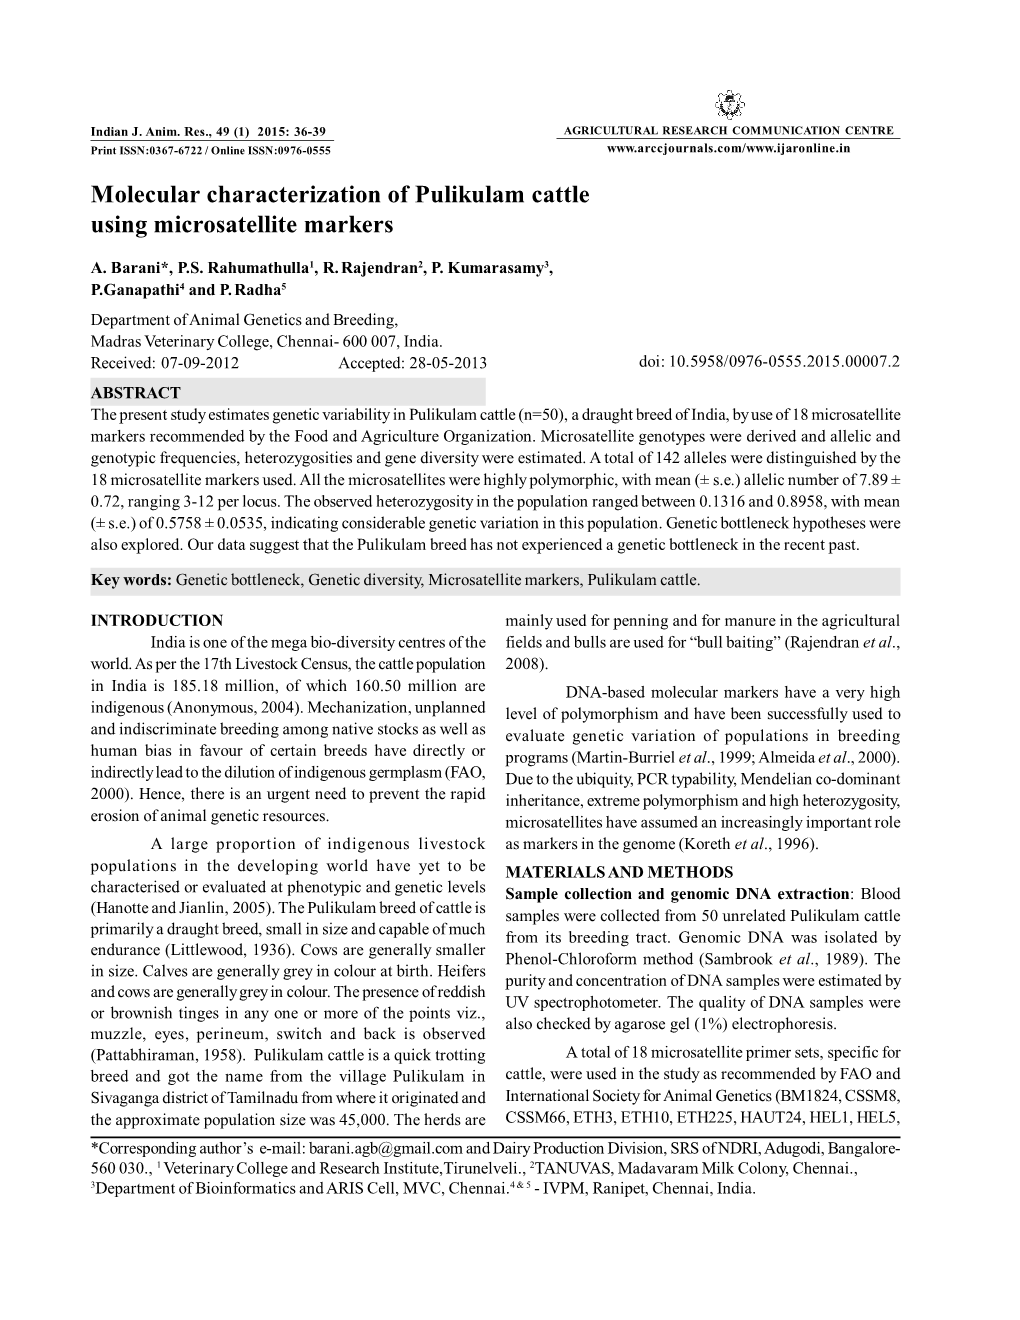 Molecular Characterization of Pulikulam Cattle Using Microsatellite Markers